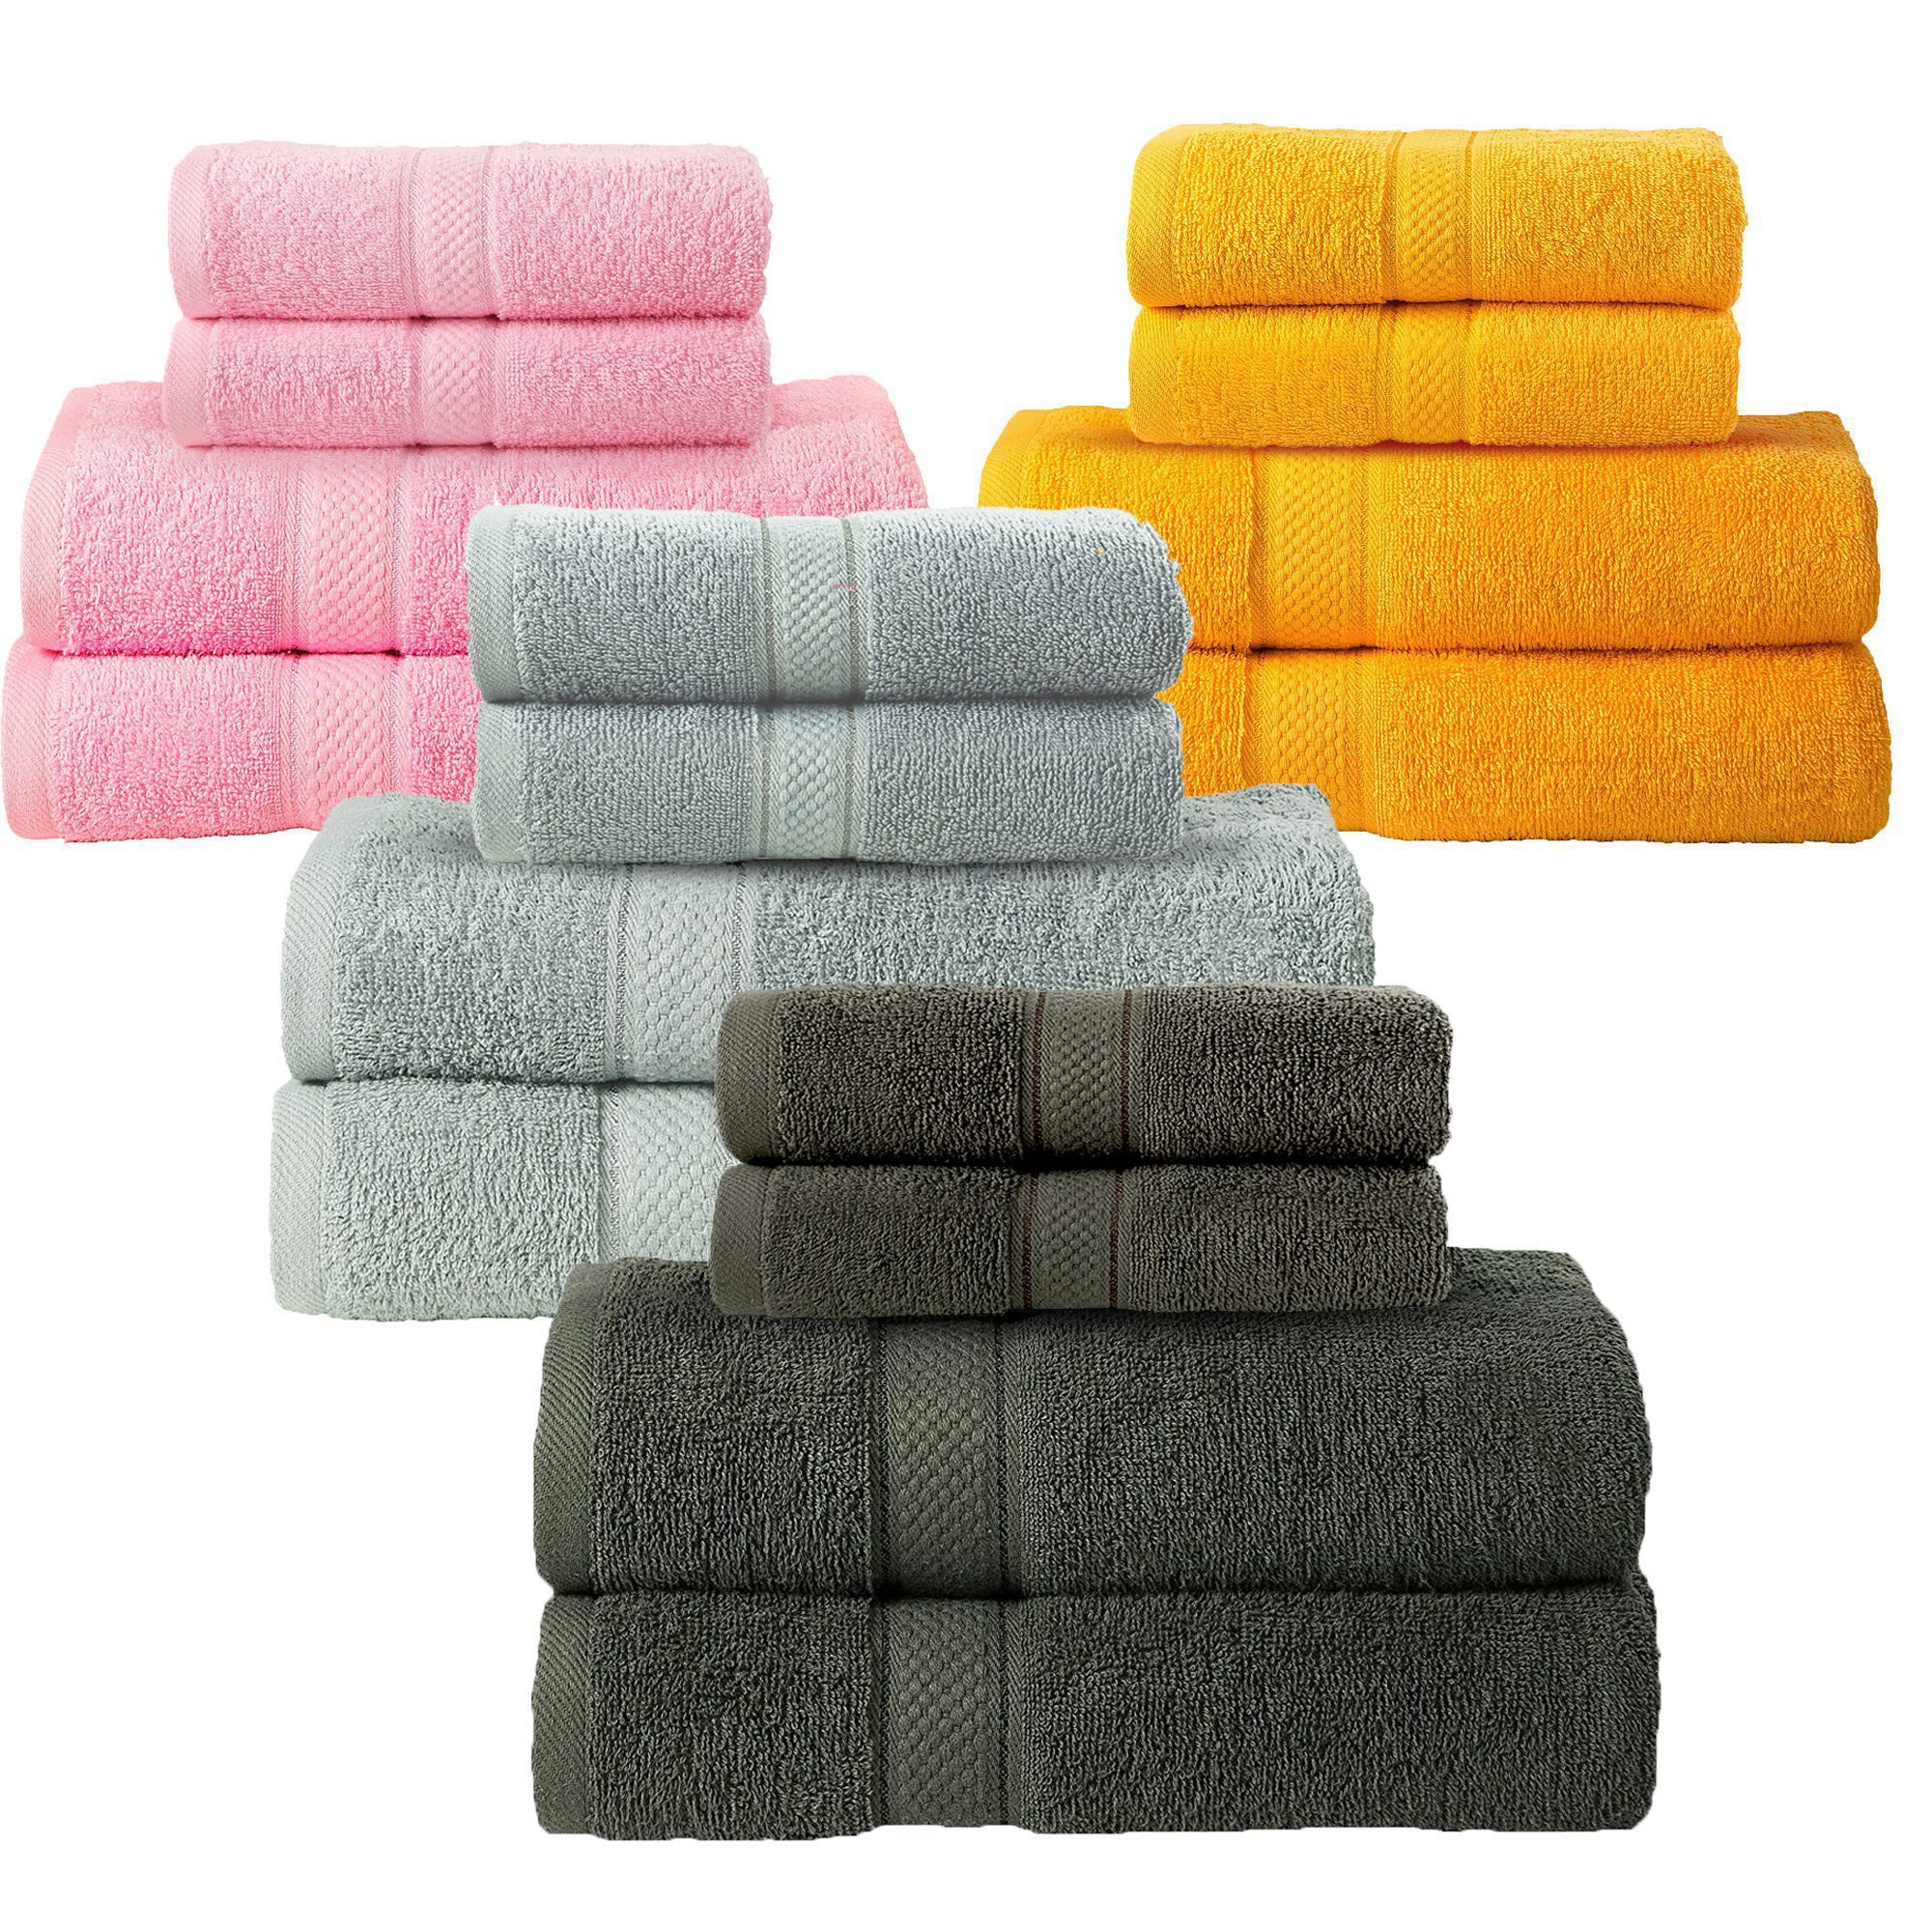 https://www.toddlinens.com/wp-content/uploads/2022/06/4pc-Hand-Bath-Towels-multivariation-image.jpg